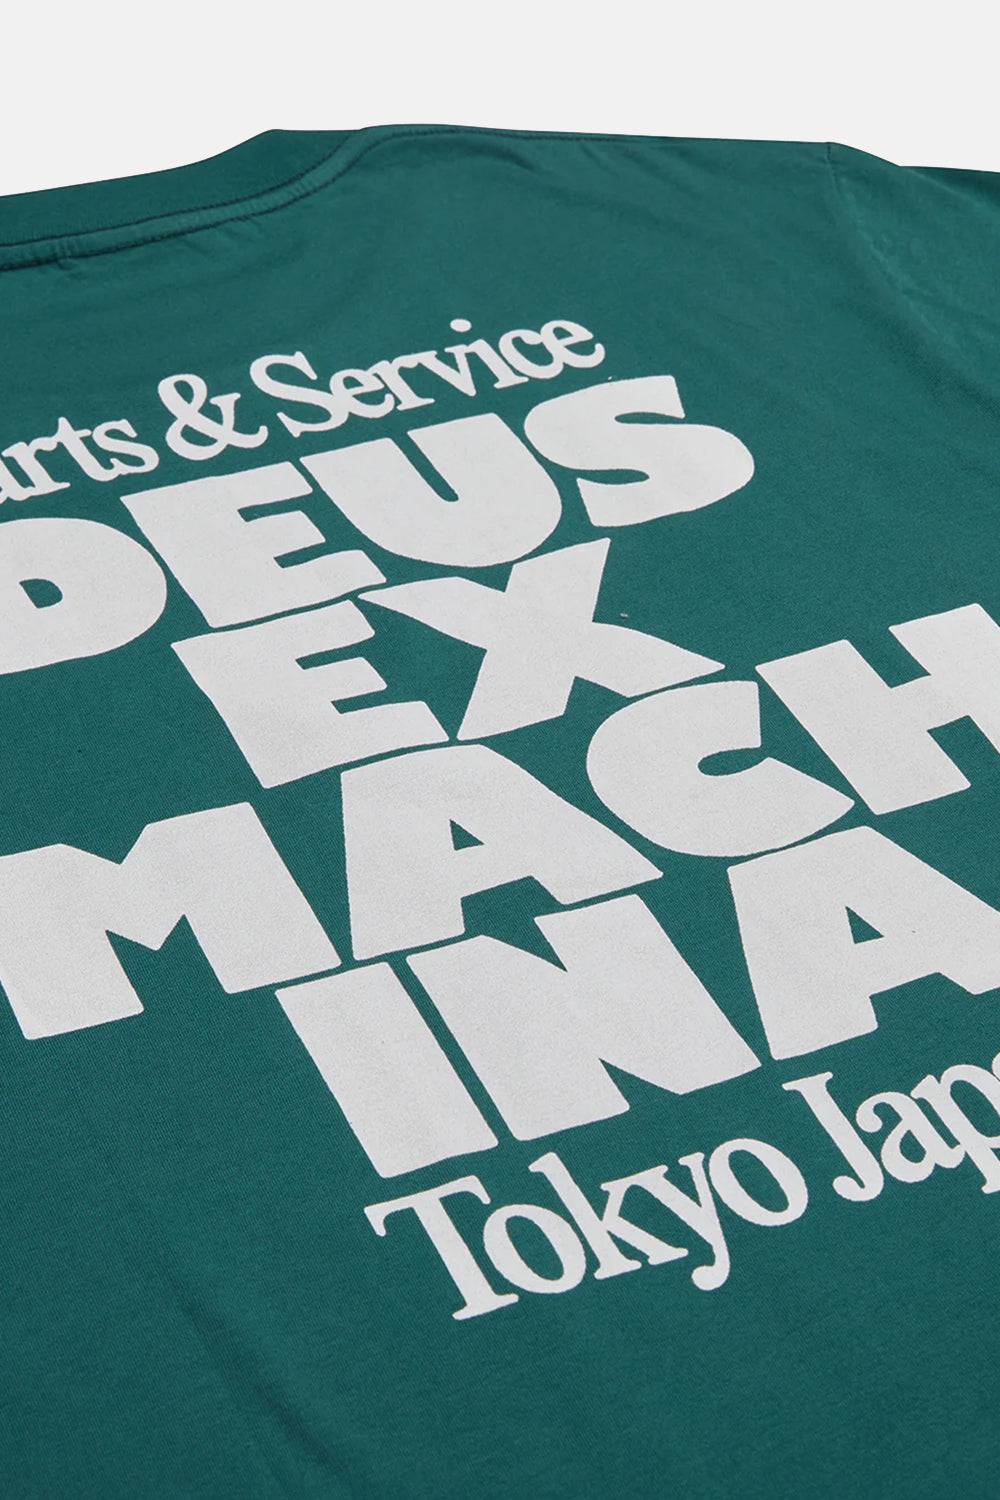 Deus Postal Organic Cotton T-Shirt (Work Green)